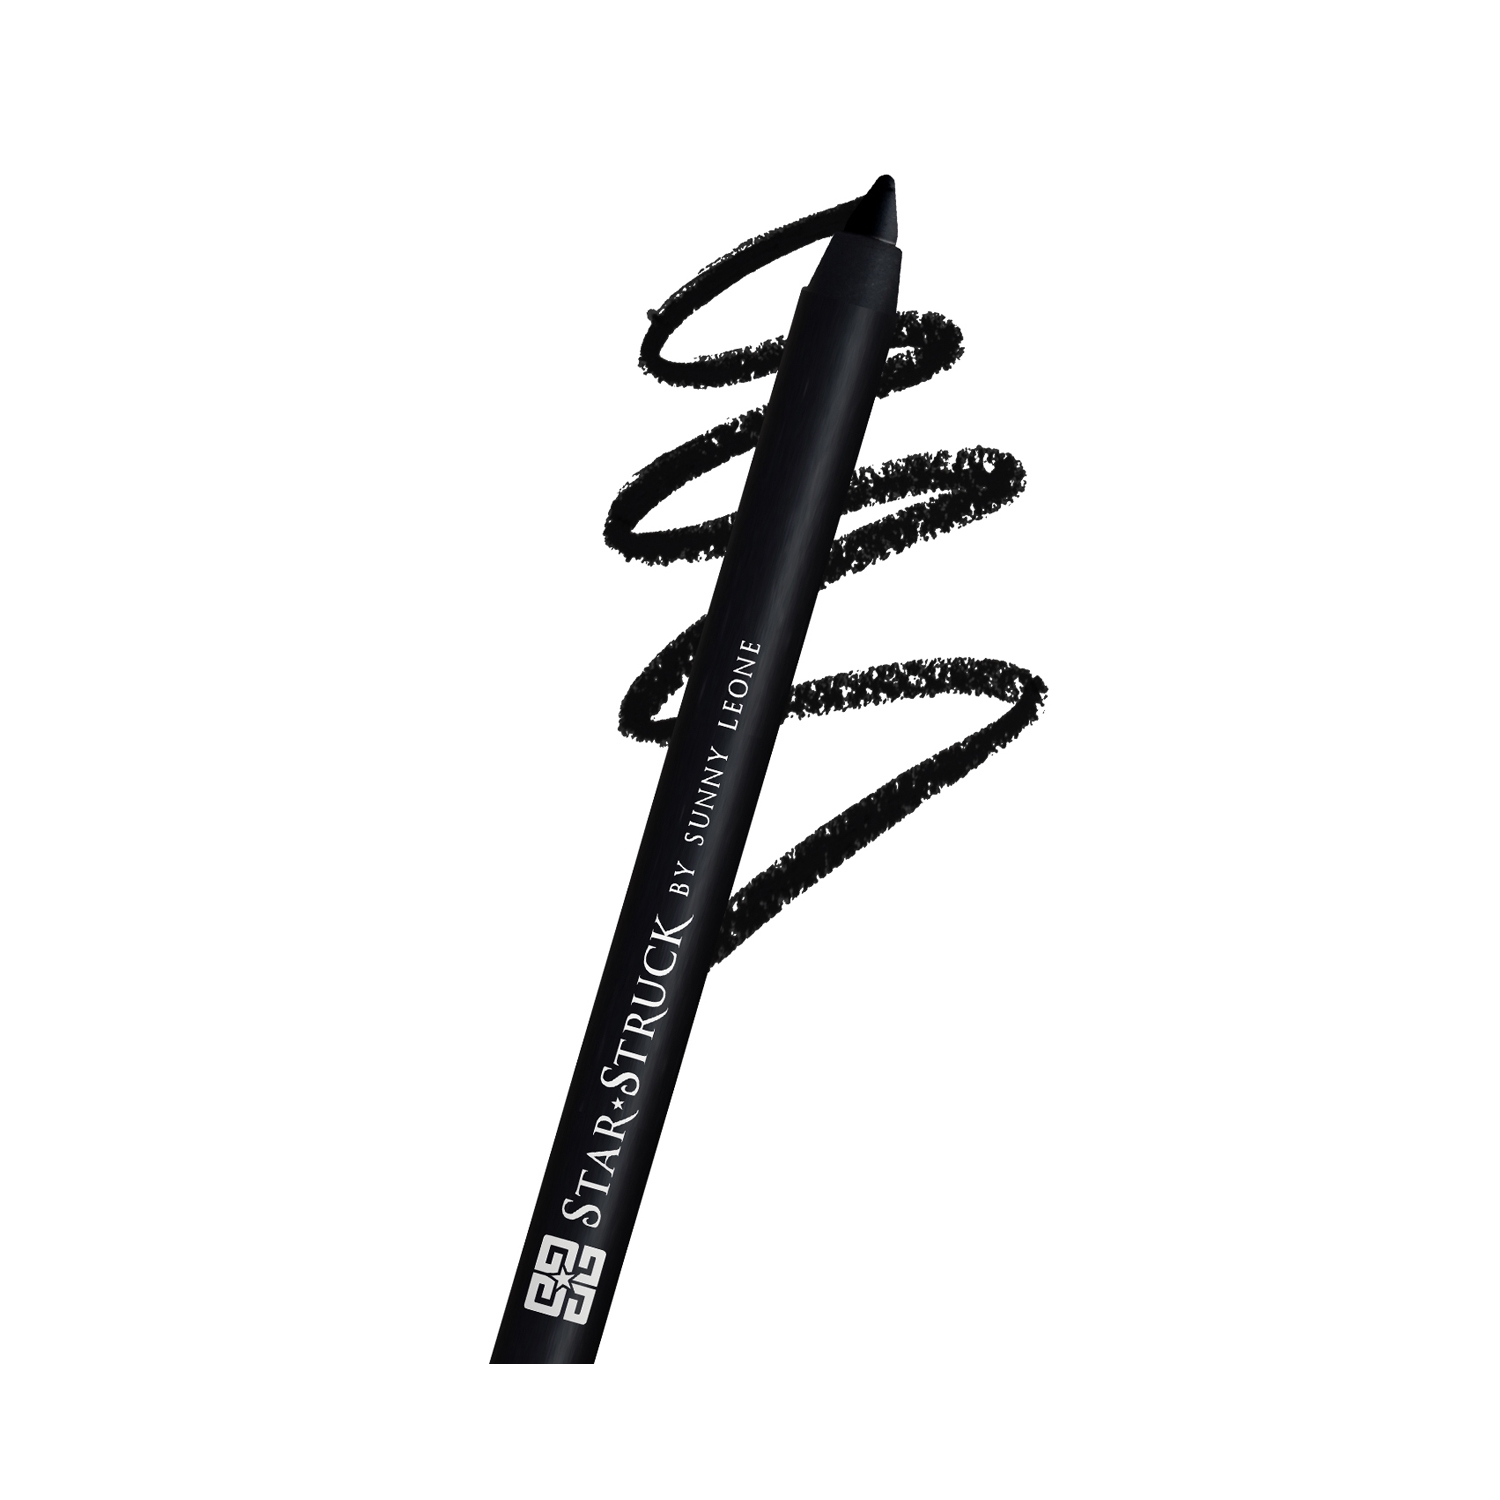 Star Struck by Sunny Leone Kohl Eye Liner Pencil - Black (1.2g)